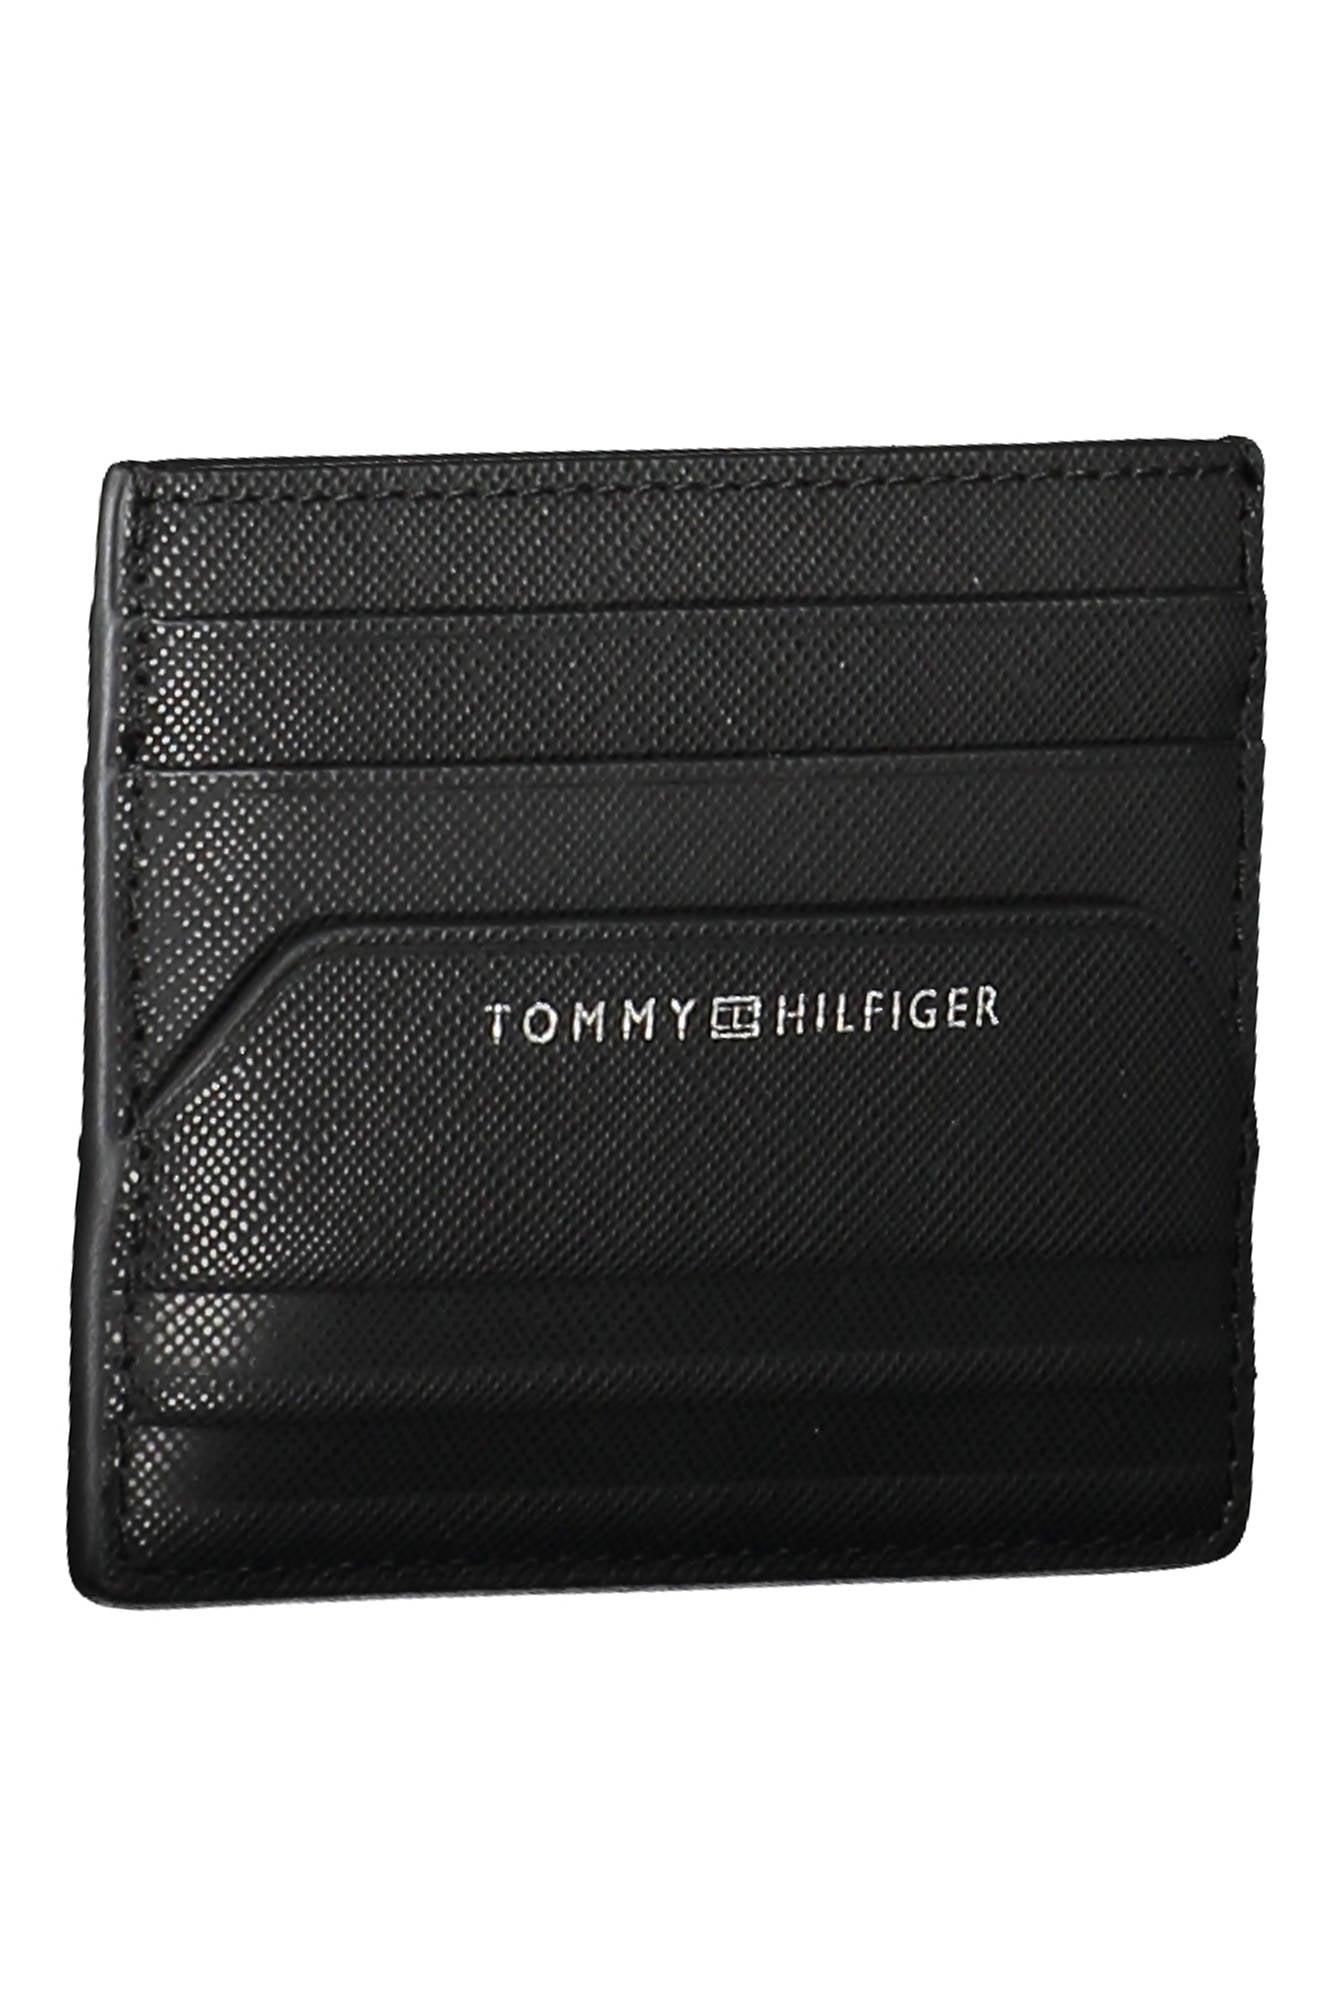 Decoratief toenemen Accor Tommy Hilfiger Black Leather Wallet for Men | Lyst